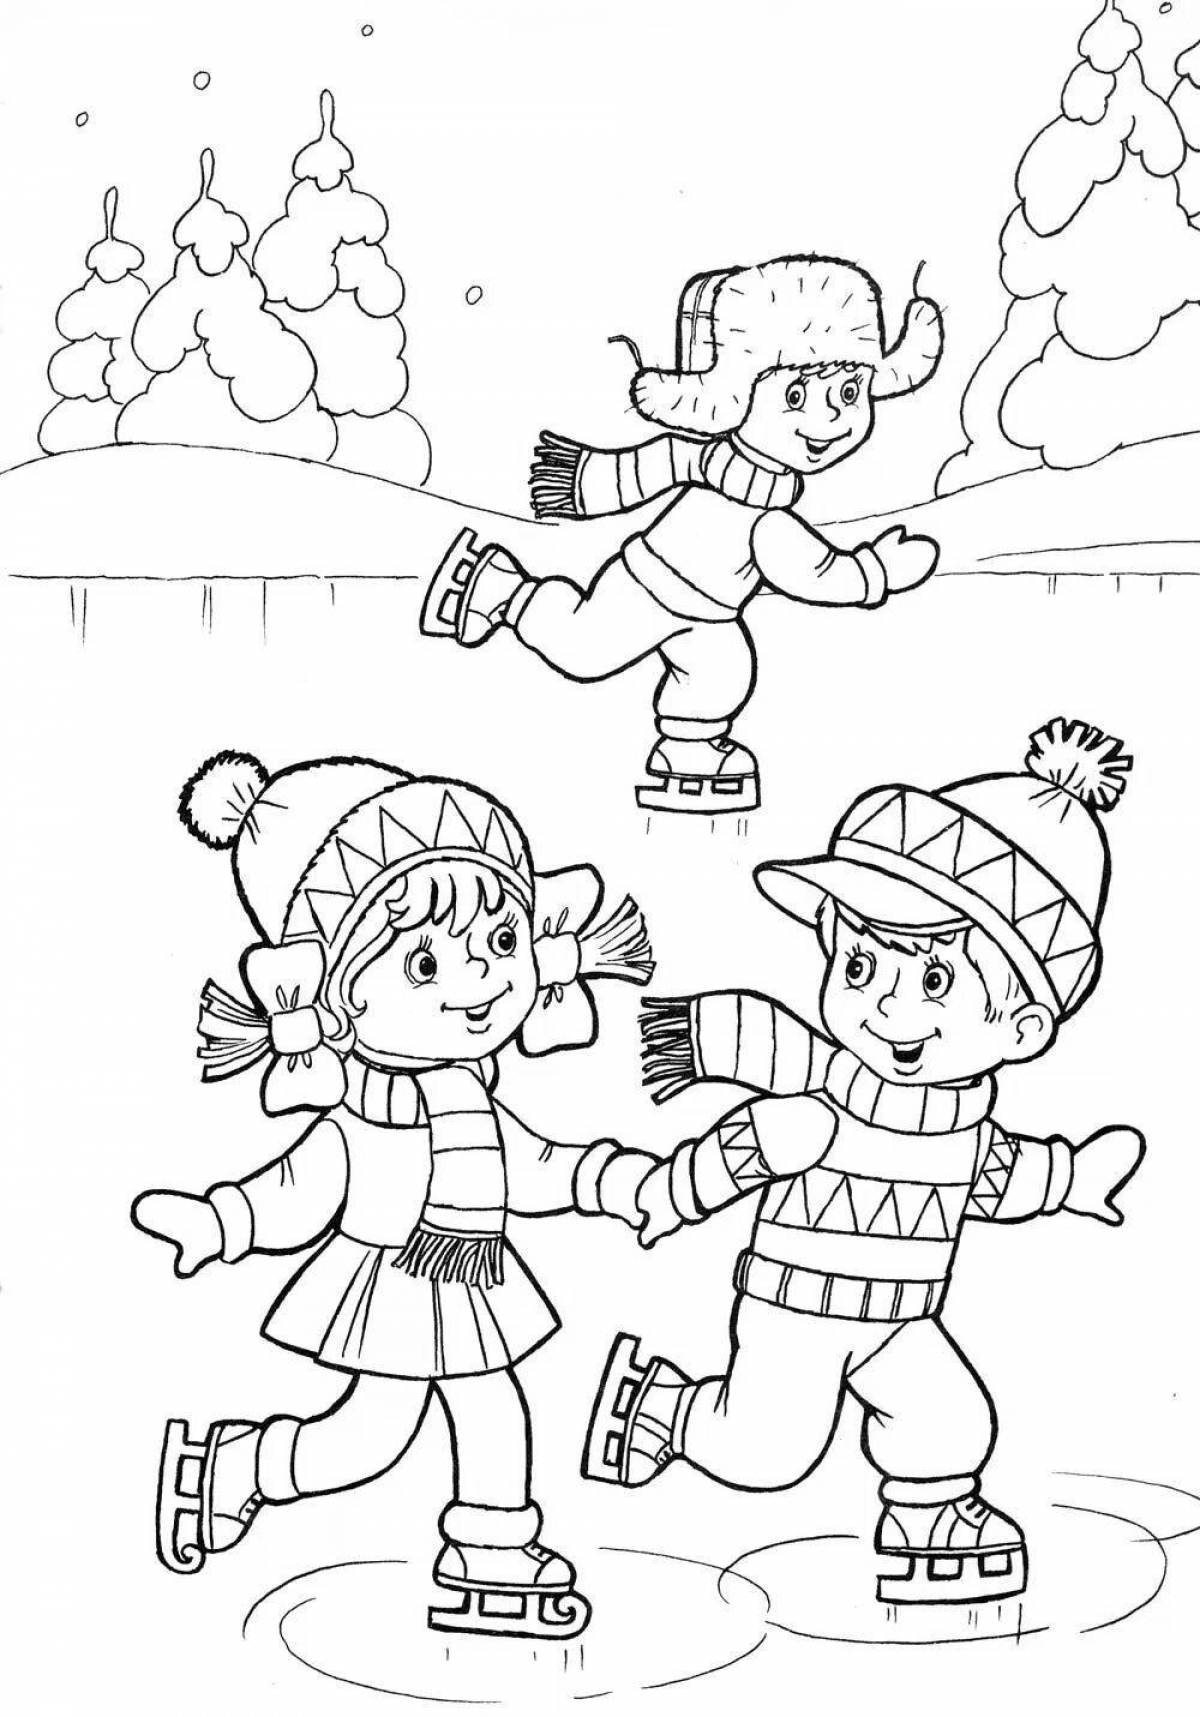 Luminous children walk in winter